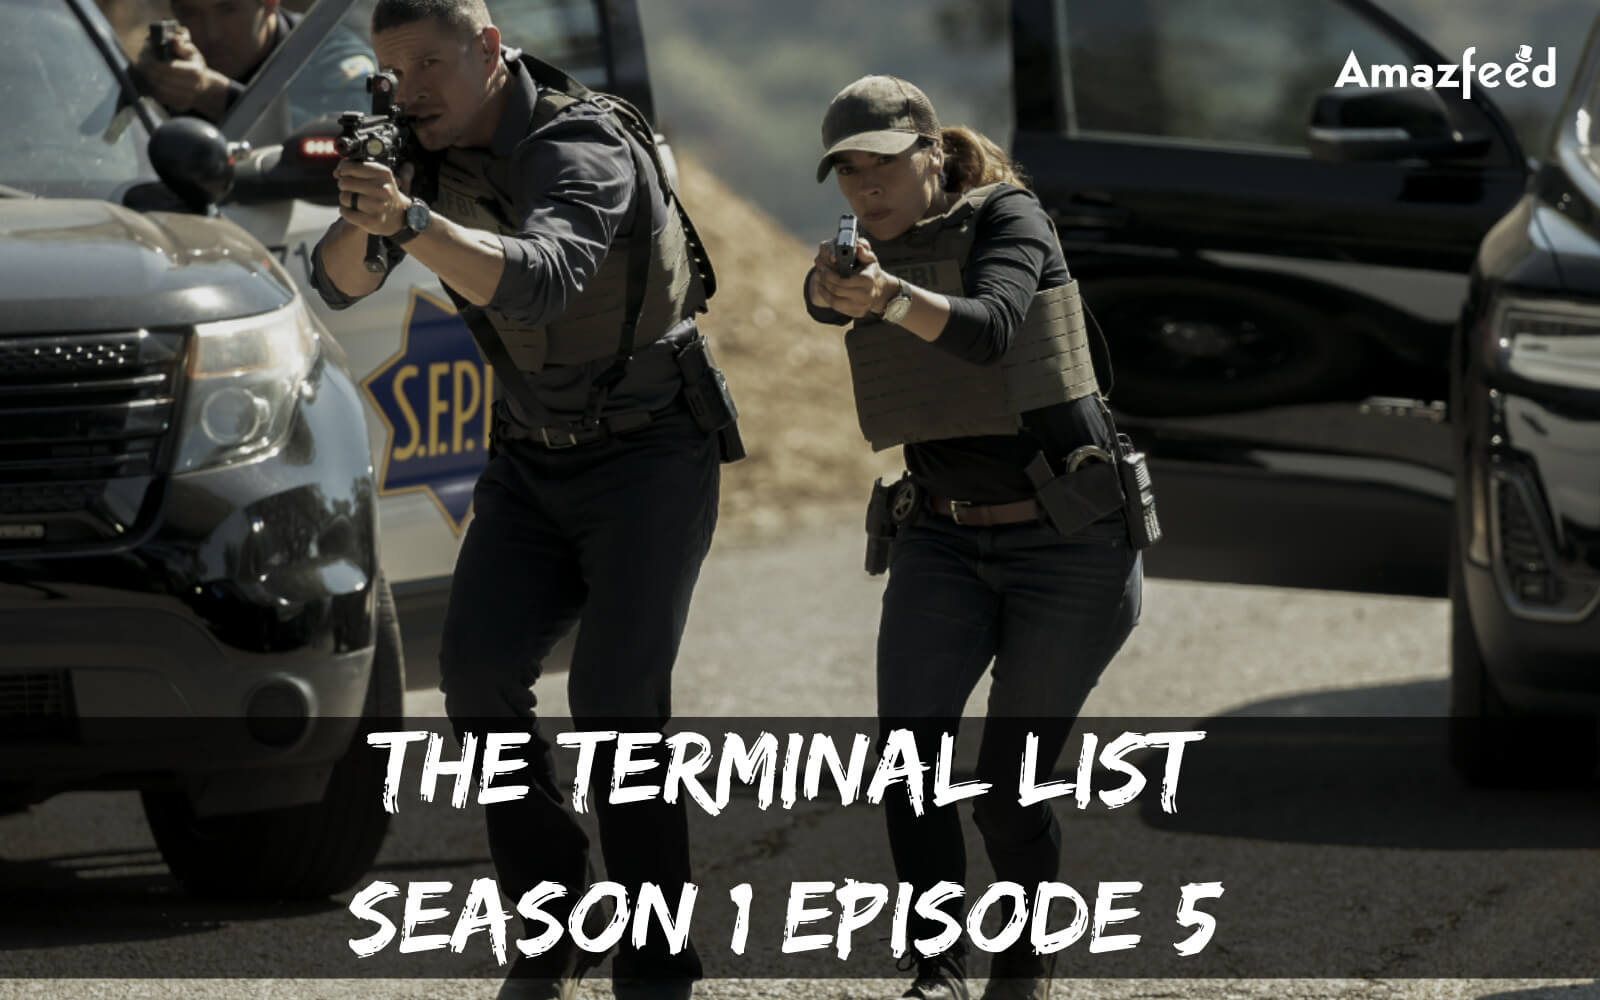 The Terminal List season 1 episode 5 release date